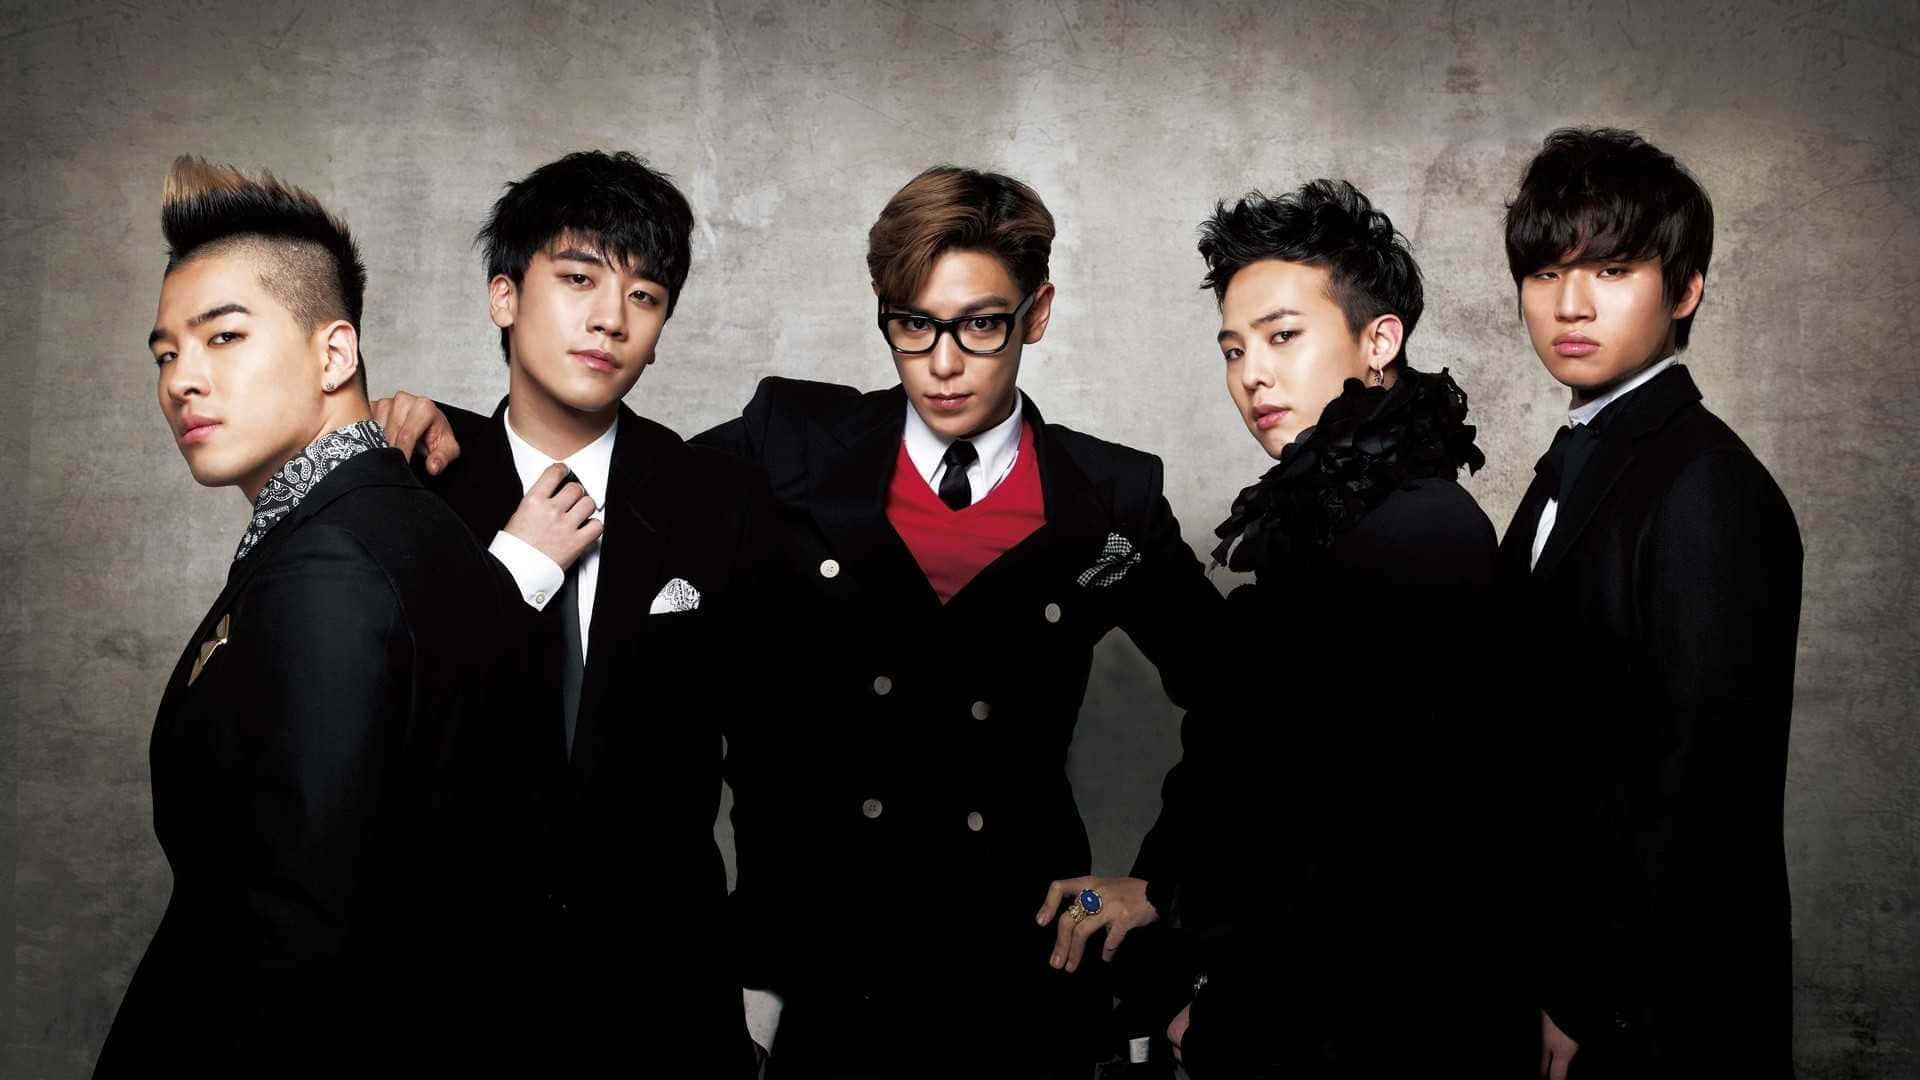 All 5 members of South Korean band Bigbang pose in the snow